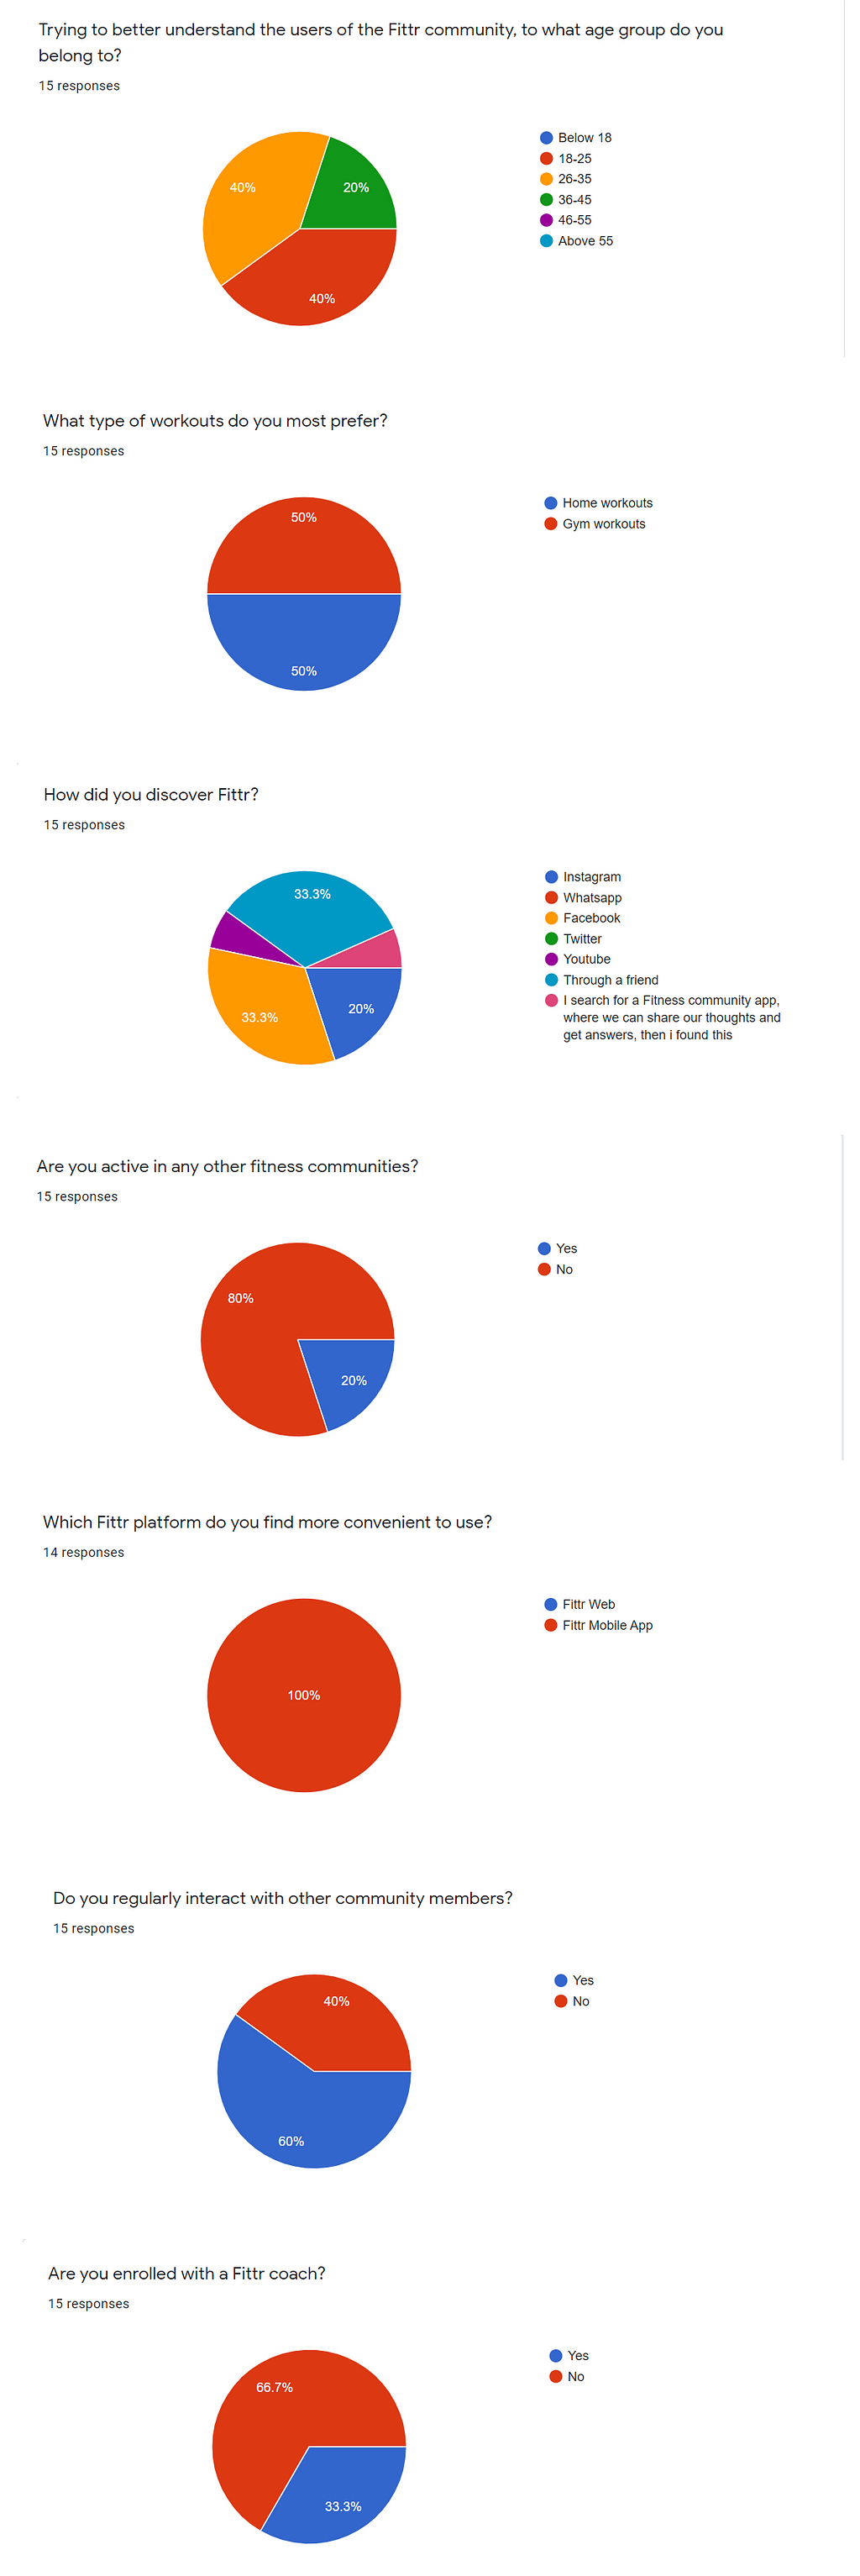 Survey results